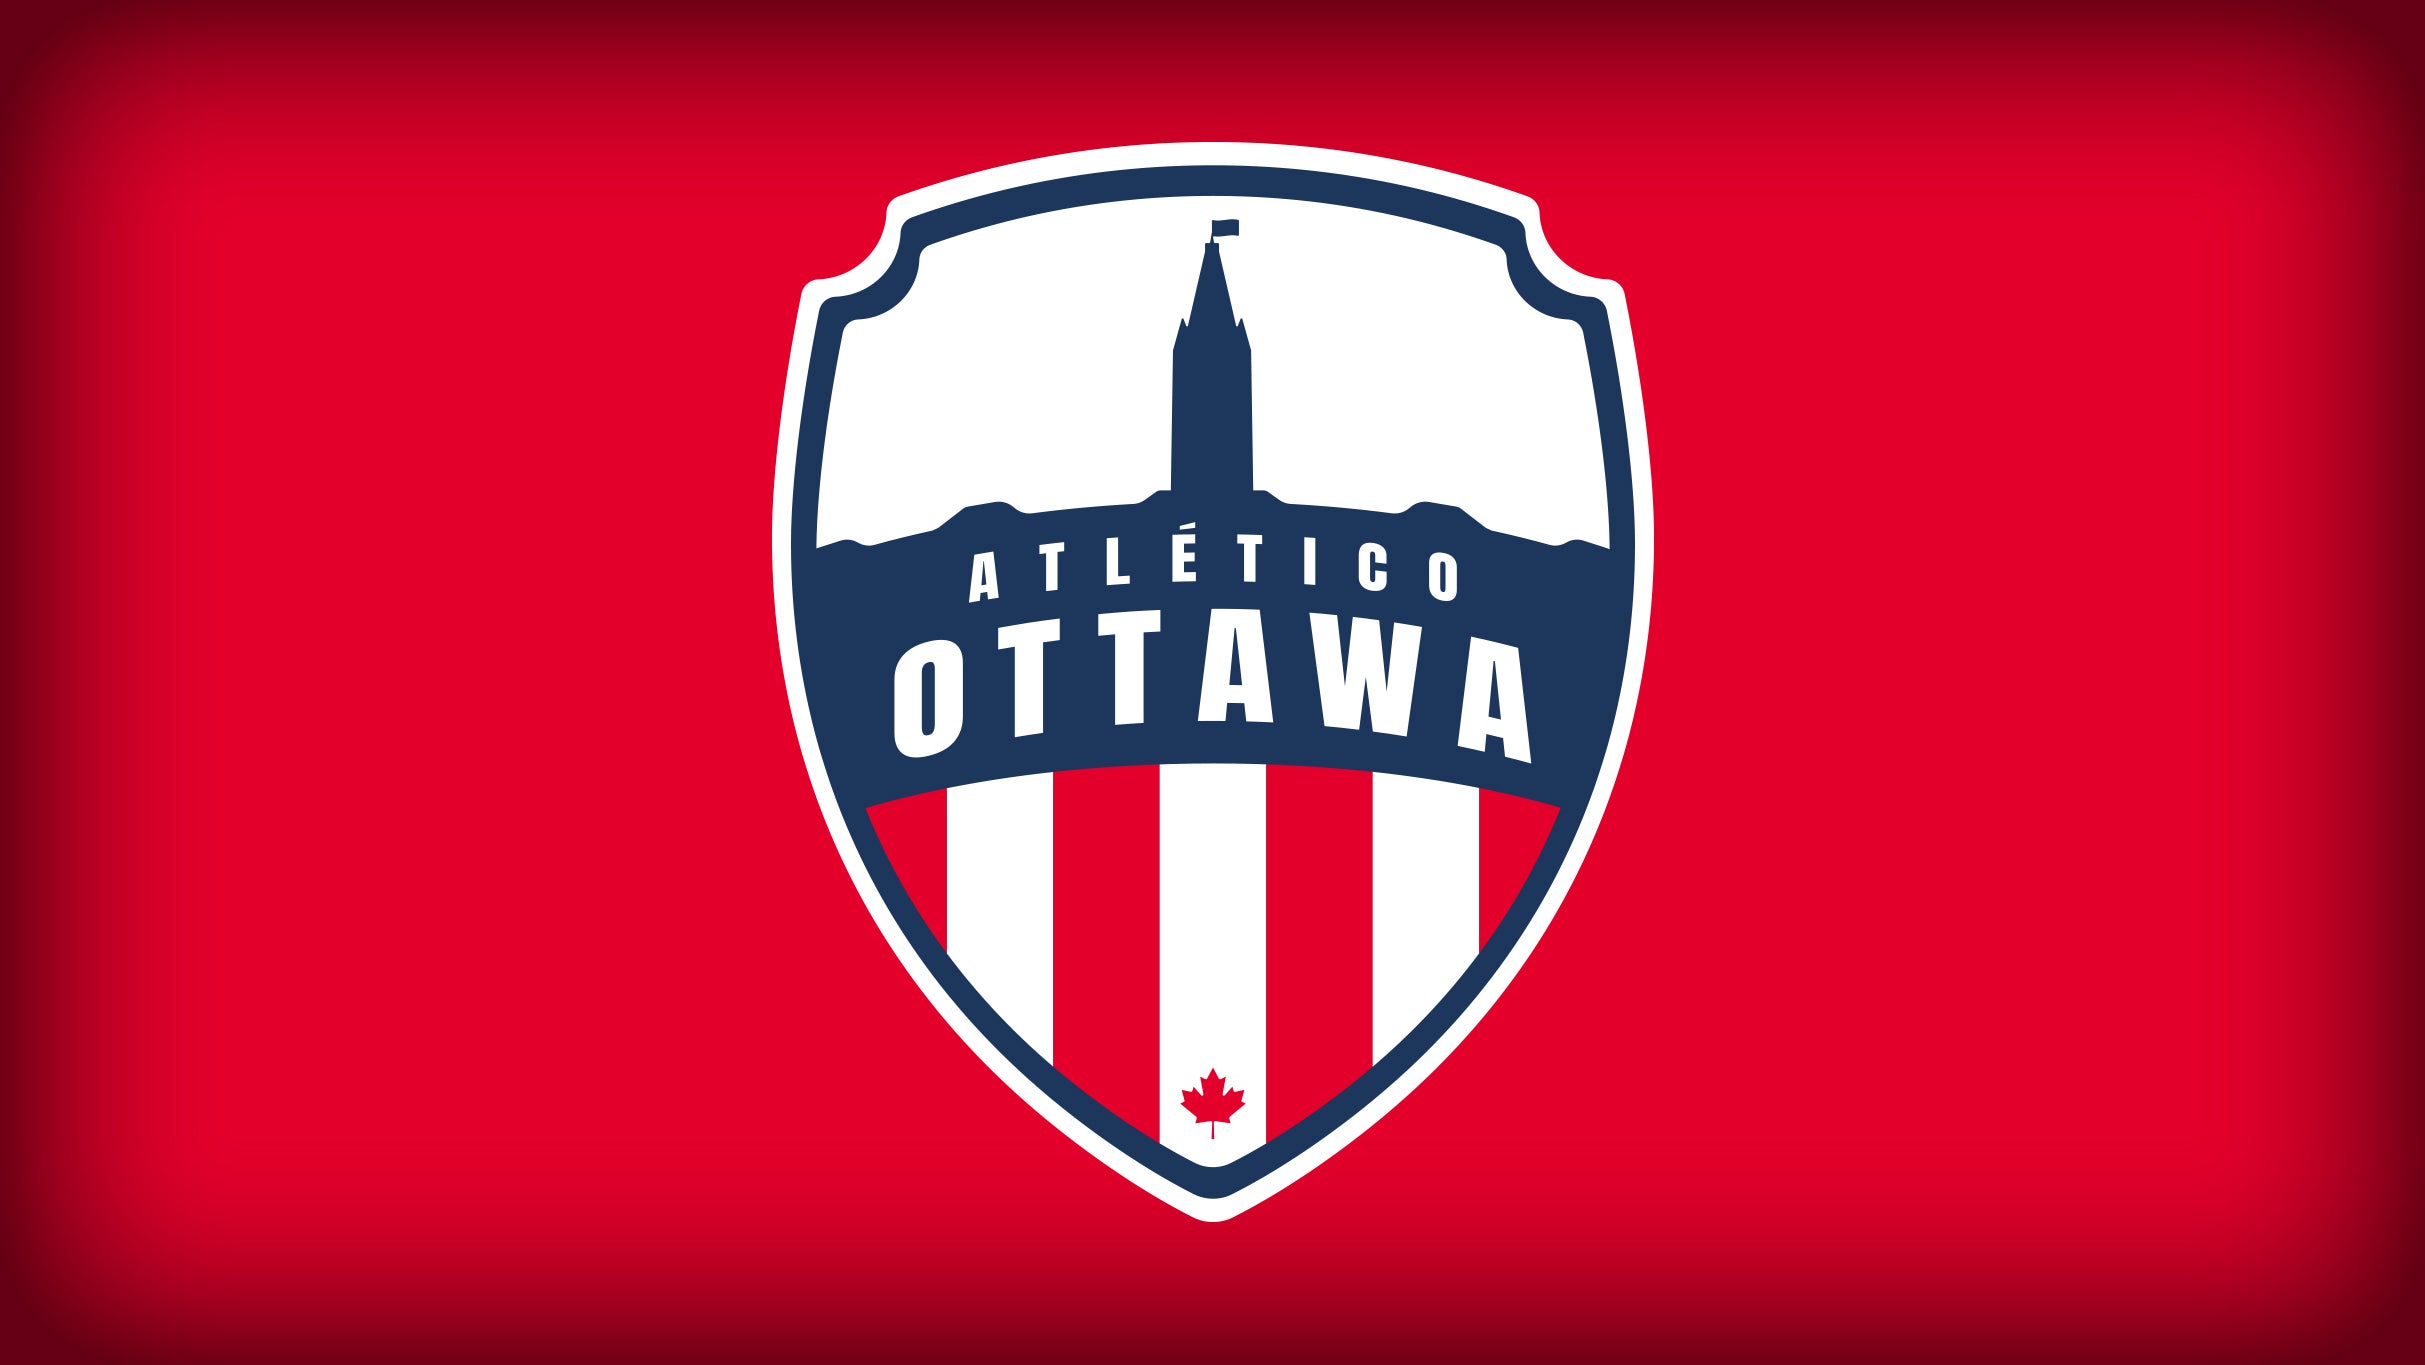 Atlético Ottawa vs. HFX Wanderers FC in Ottawa promo photo for WestJet Rewards Member Discount presale offer code